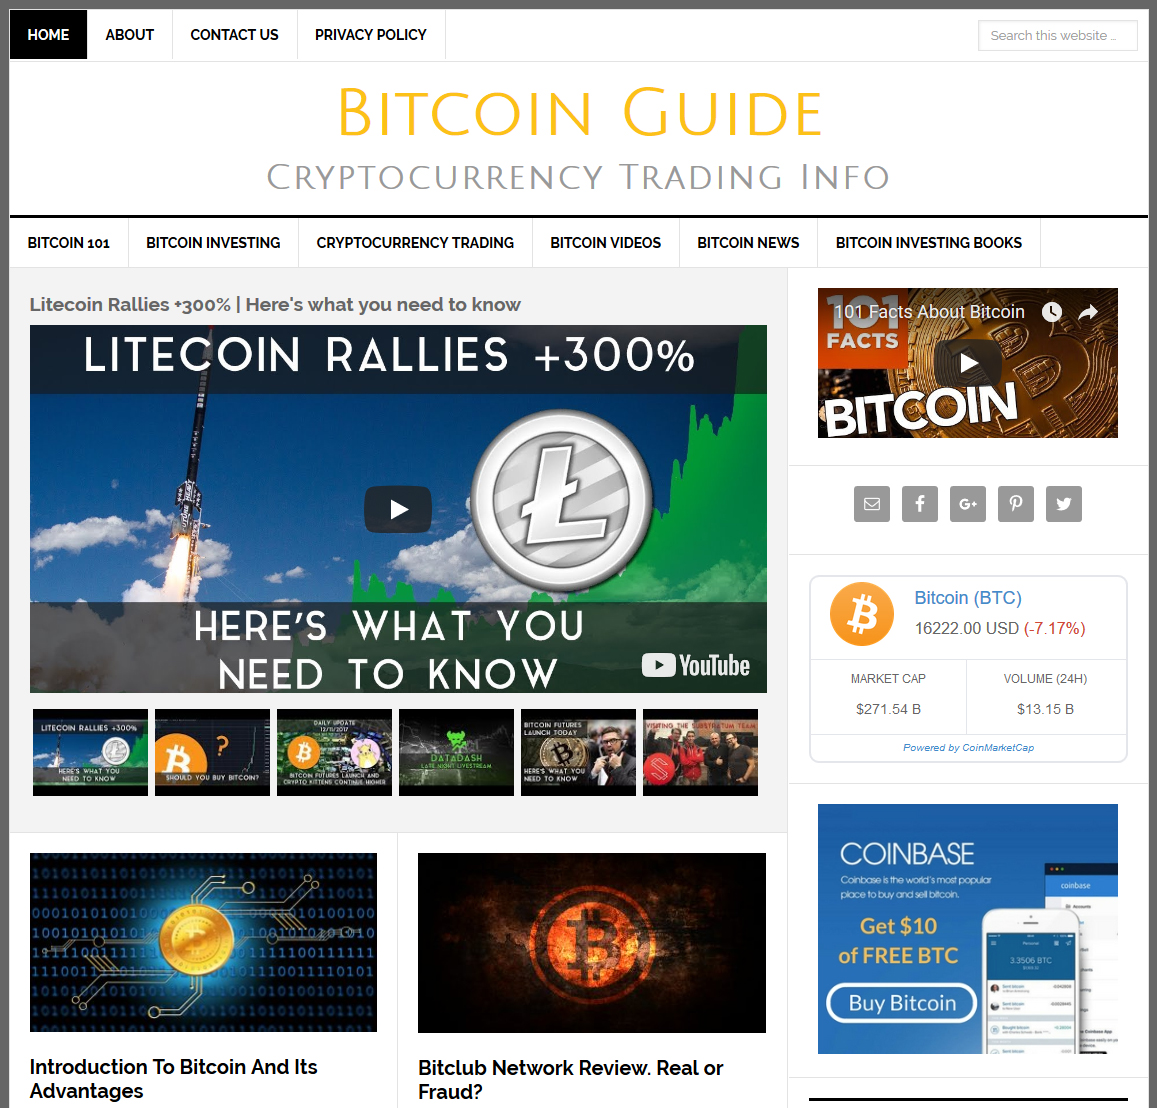 add bitcoin to website